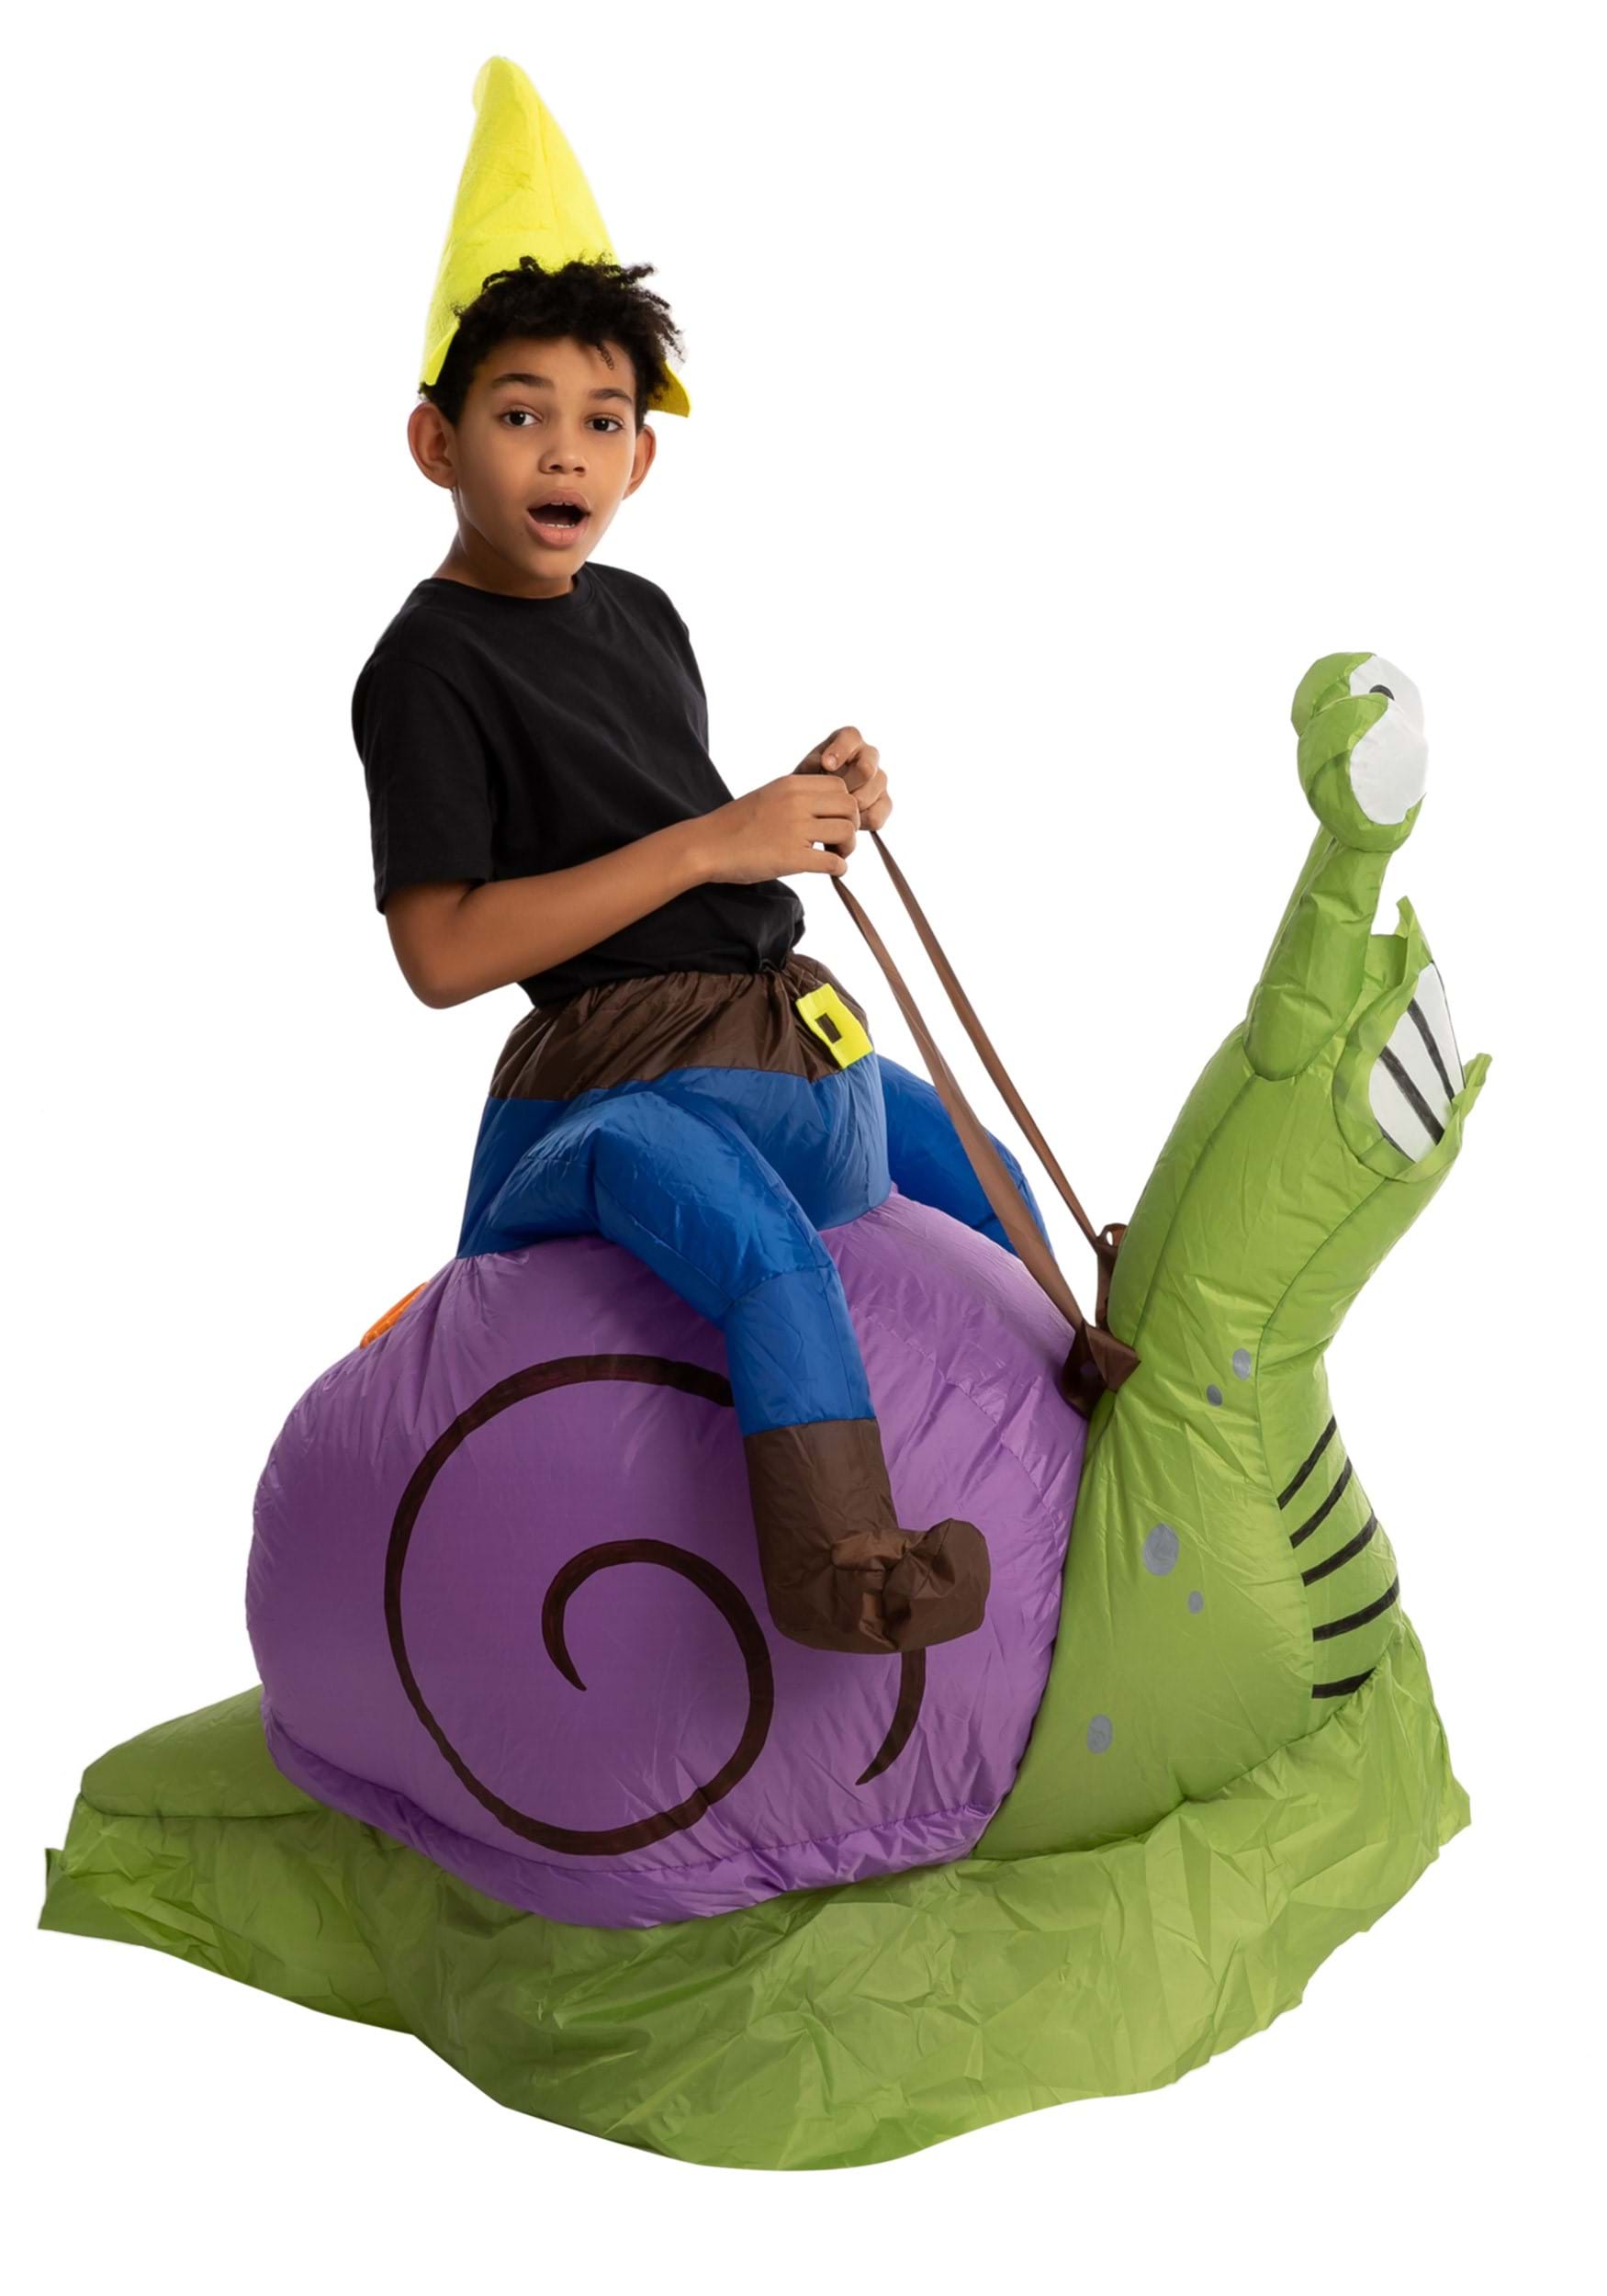 Kids Inflatable Grumpy Snail Ride-On Costume